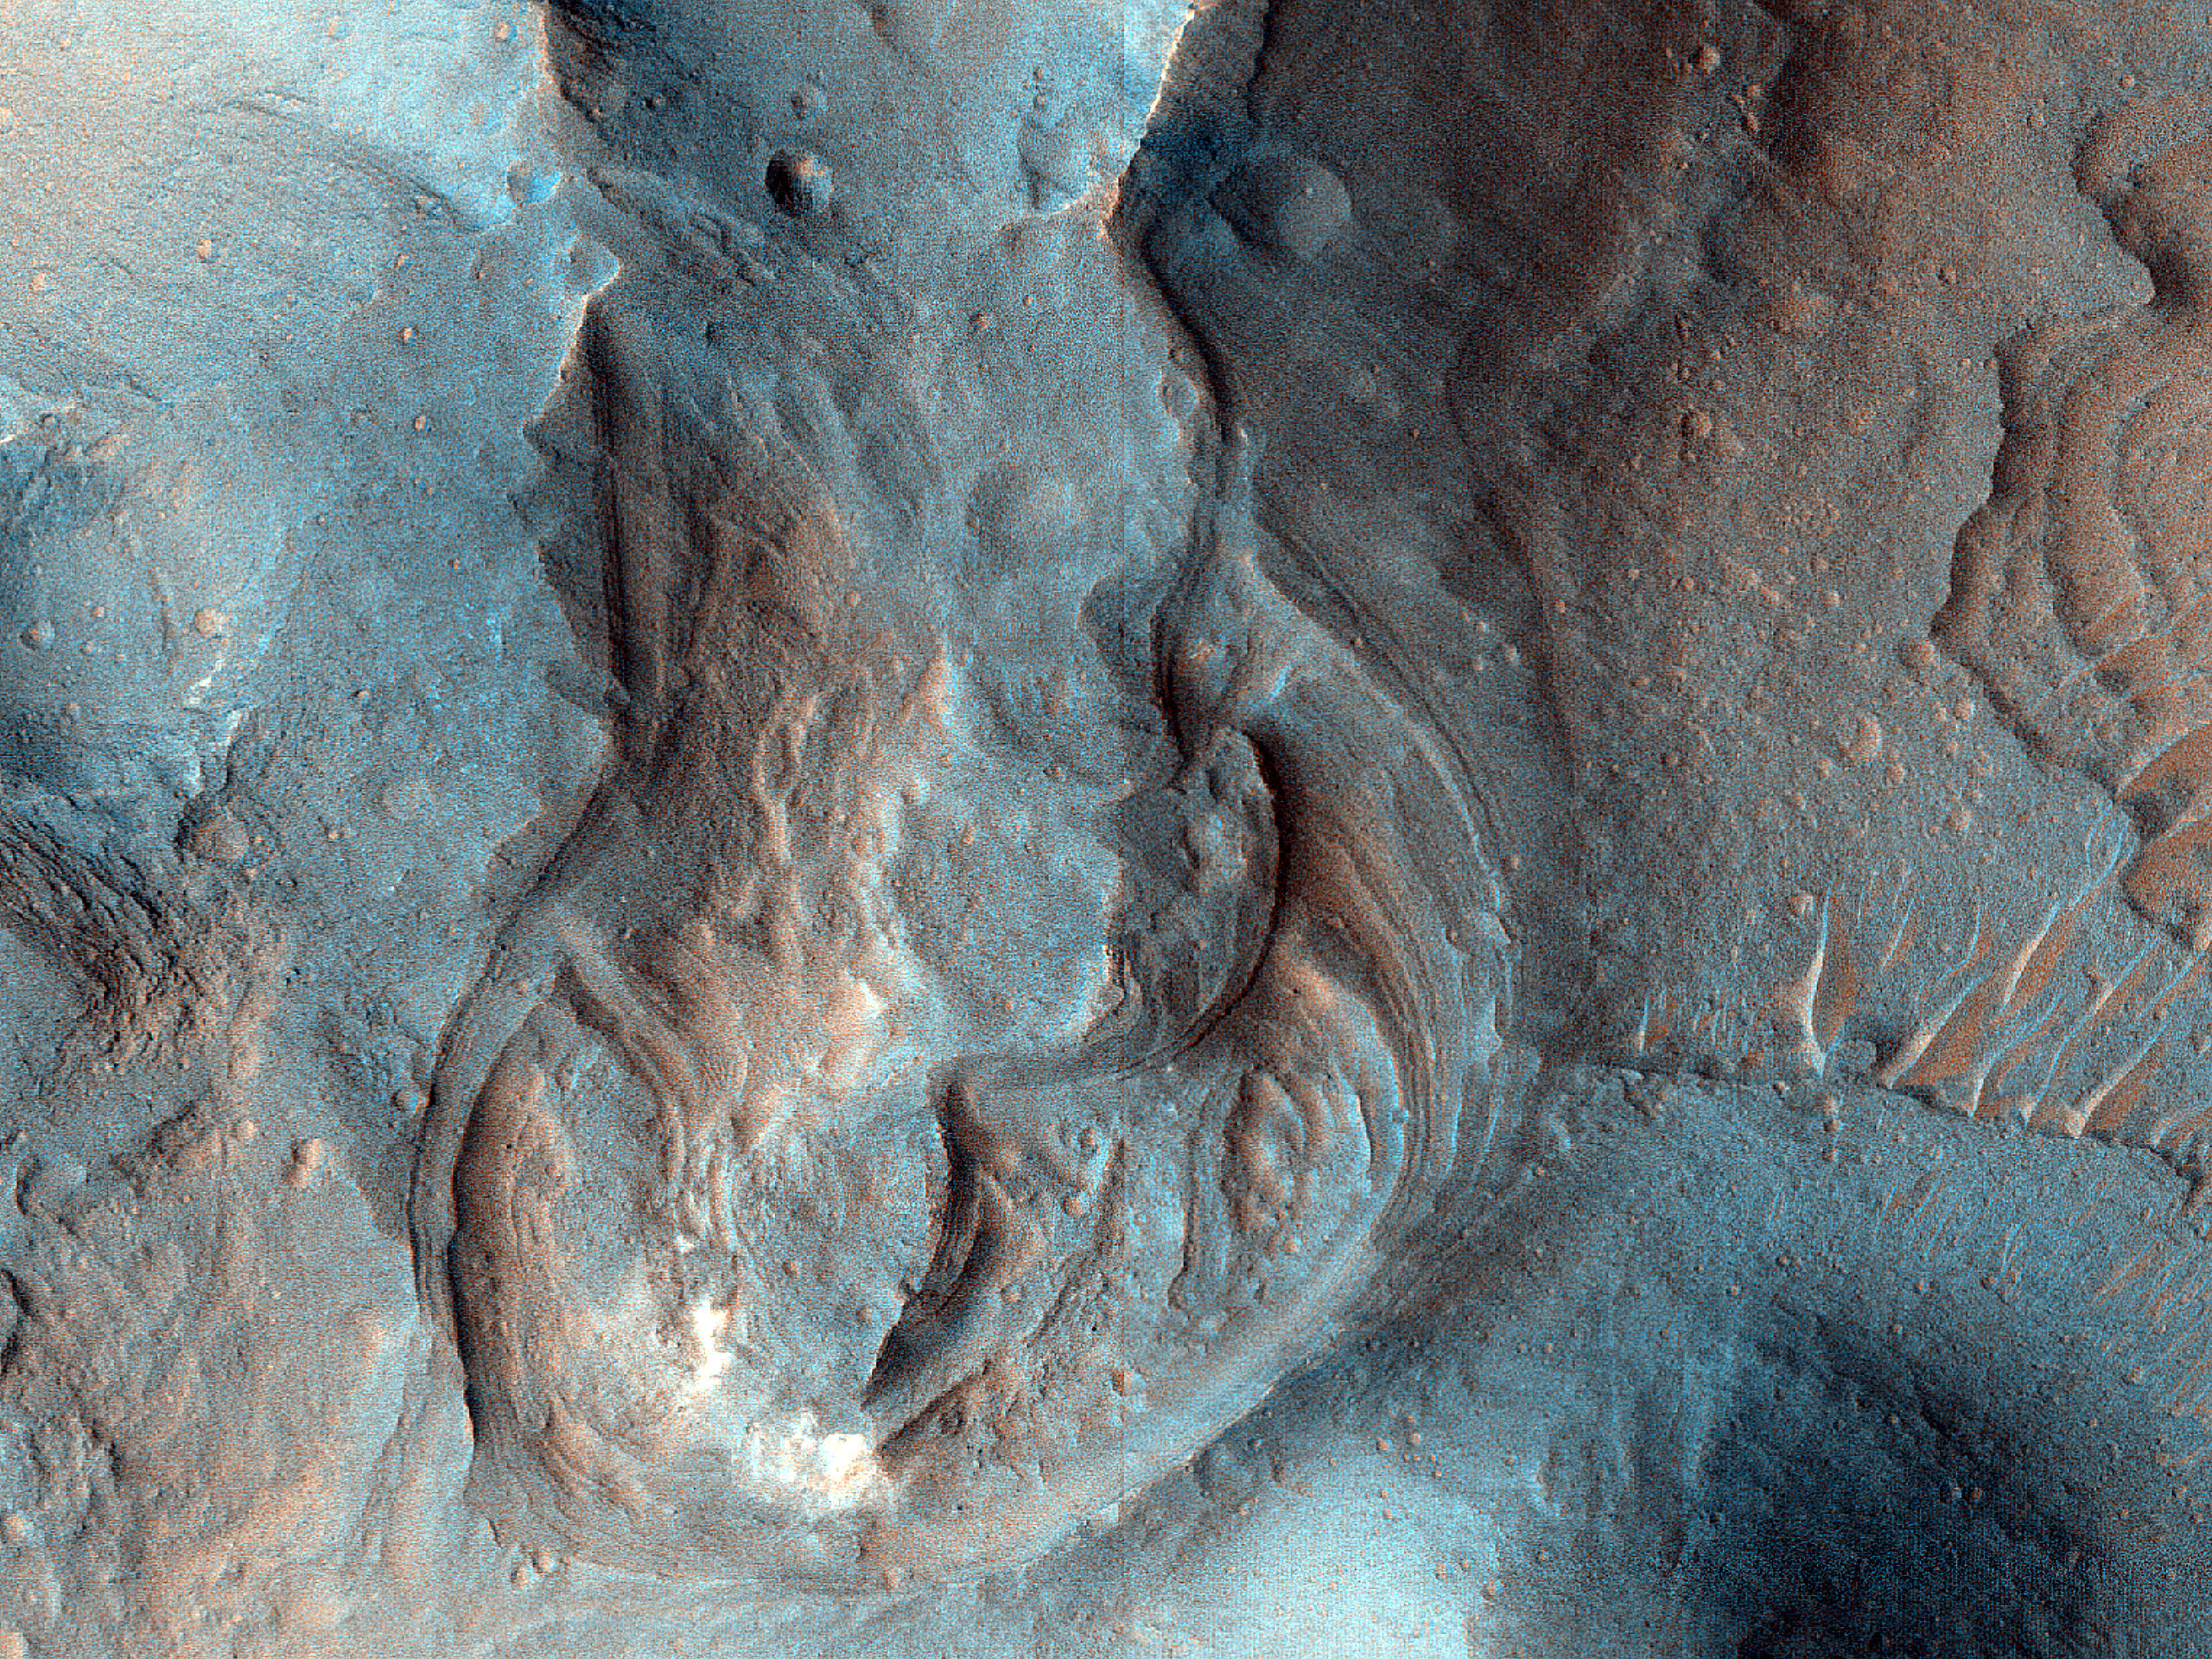 Hills in Coprates Chasma